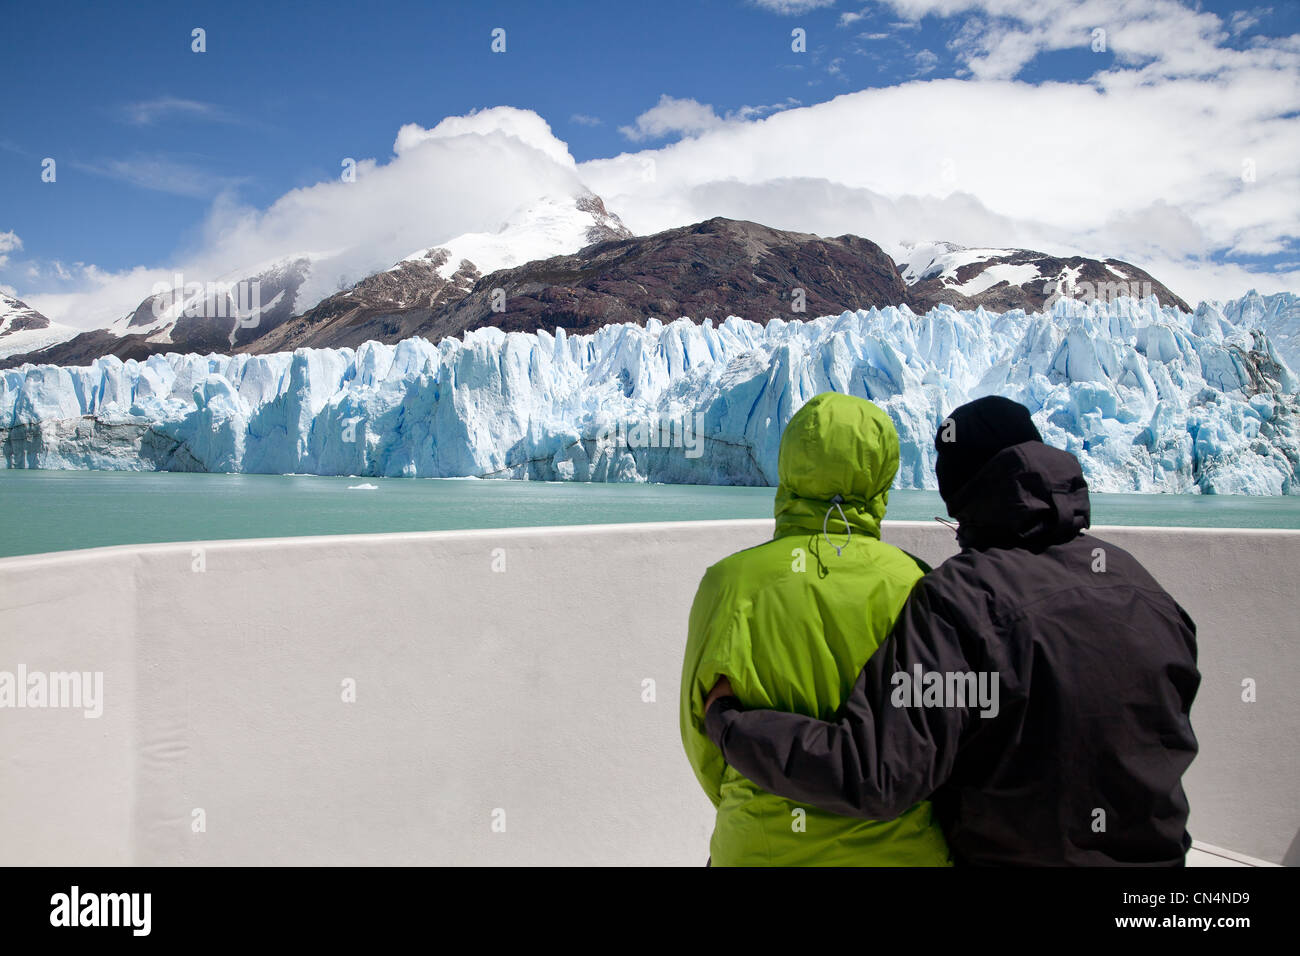 Chile, Patagonia, Aisen region, Capitan Prat province, Villa O'Higgins, O'Higgins lake and glacier Stock Photo